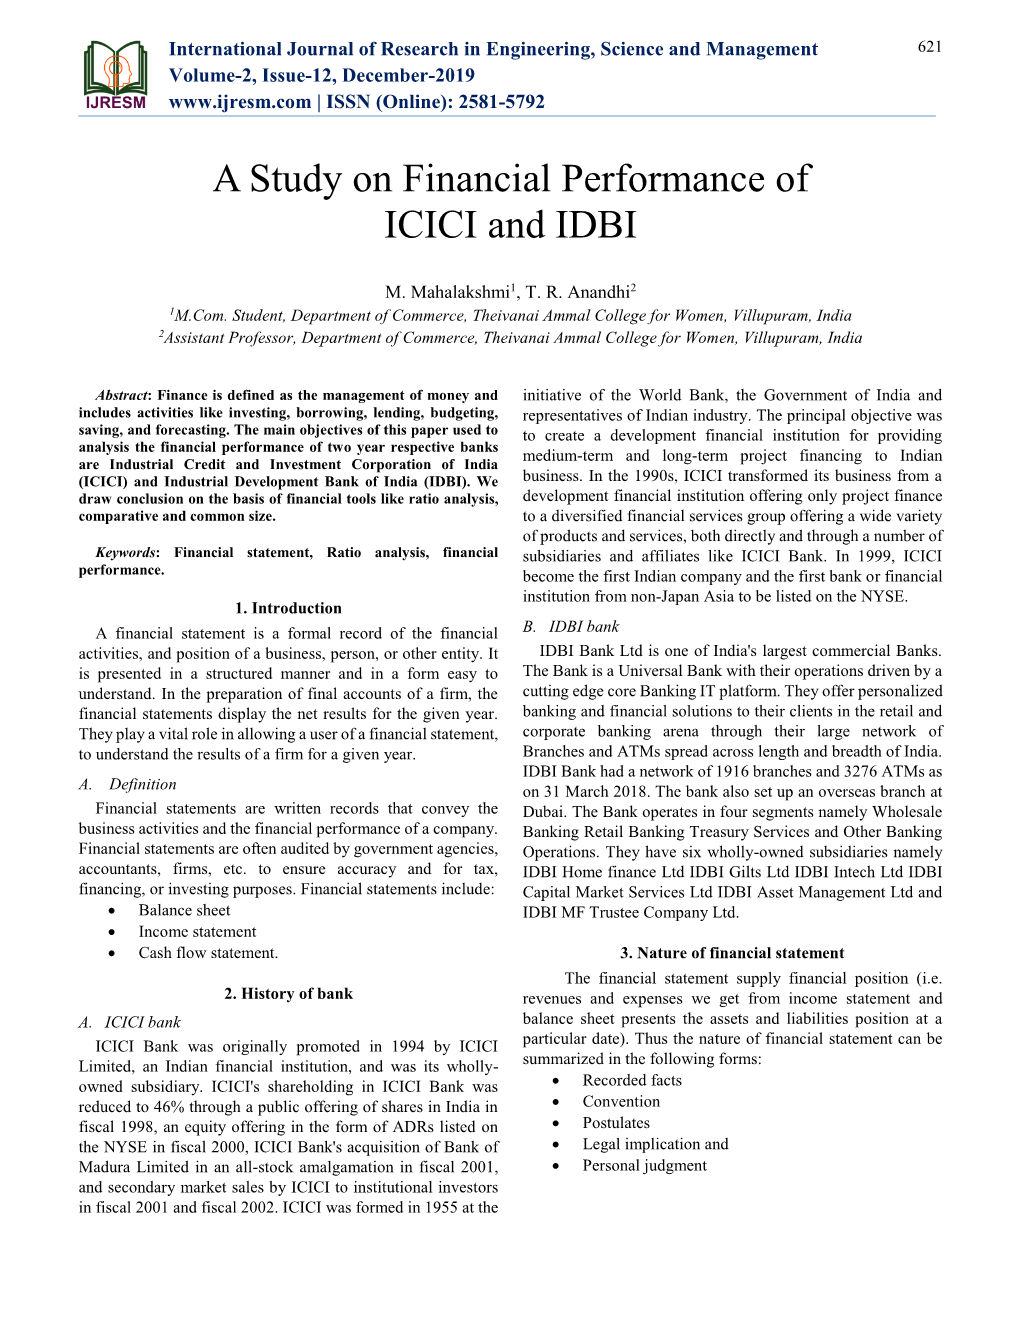 A Study on Financial Performance of ICICI and IDBI